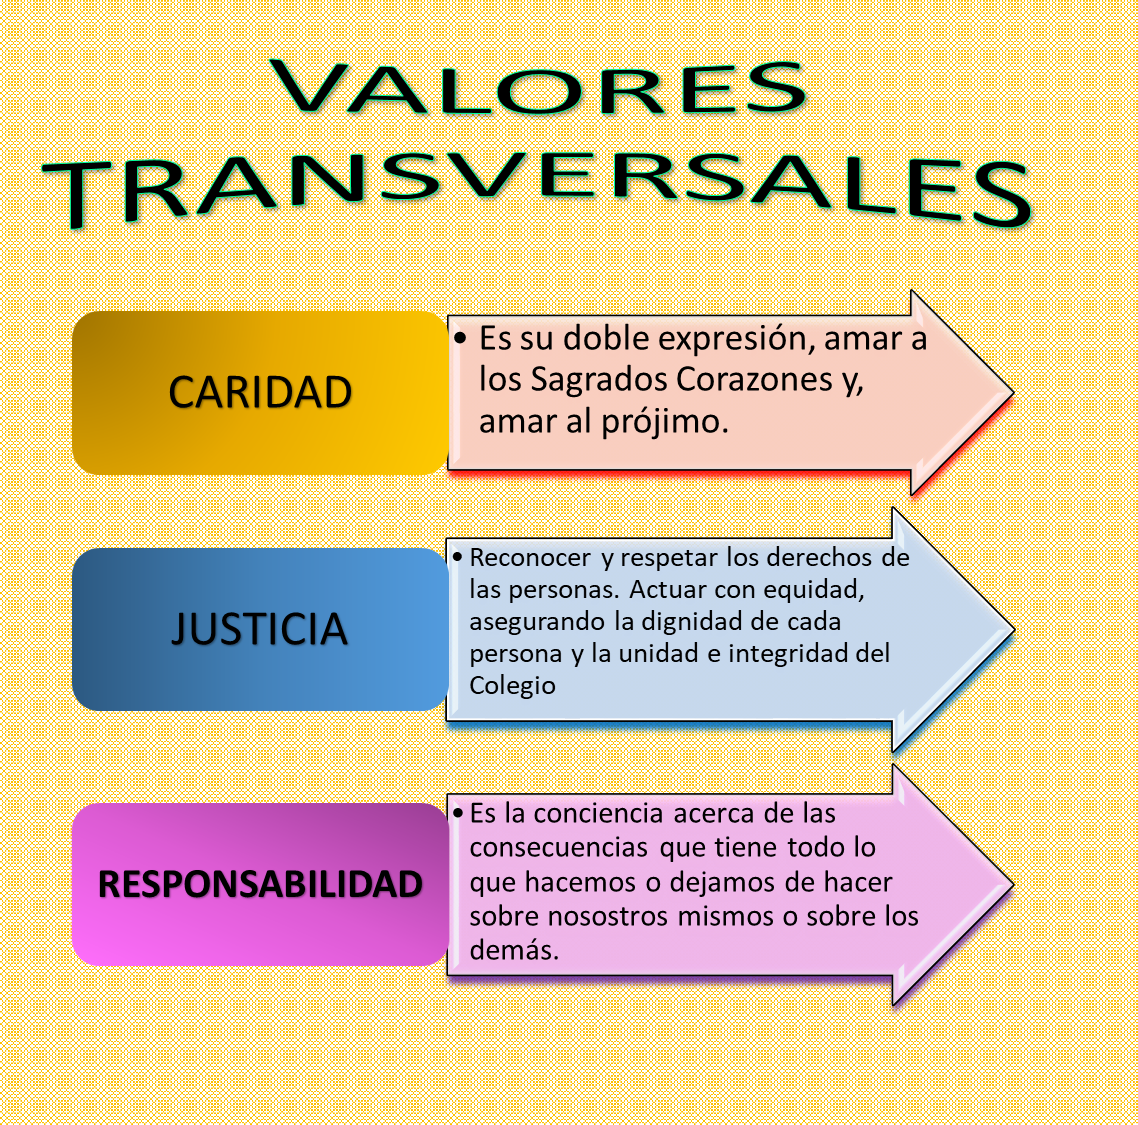 VALORES TRANSVERSALES